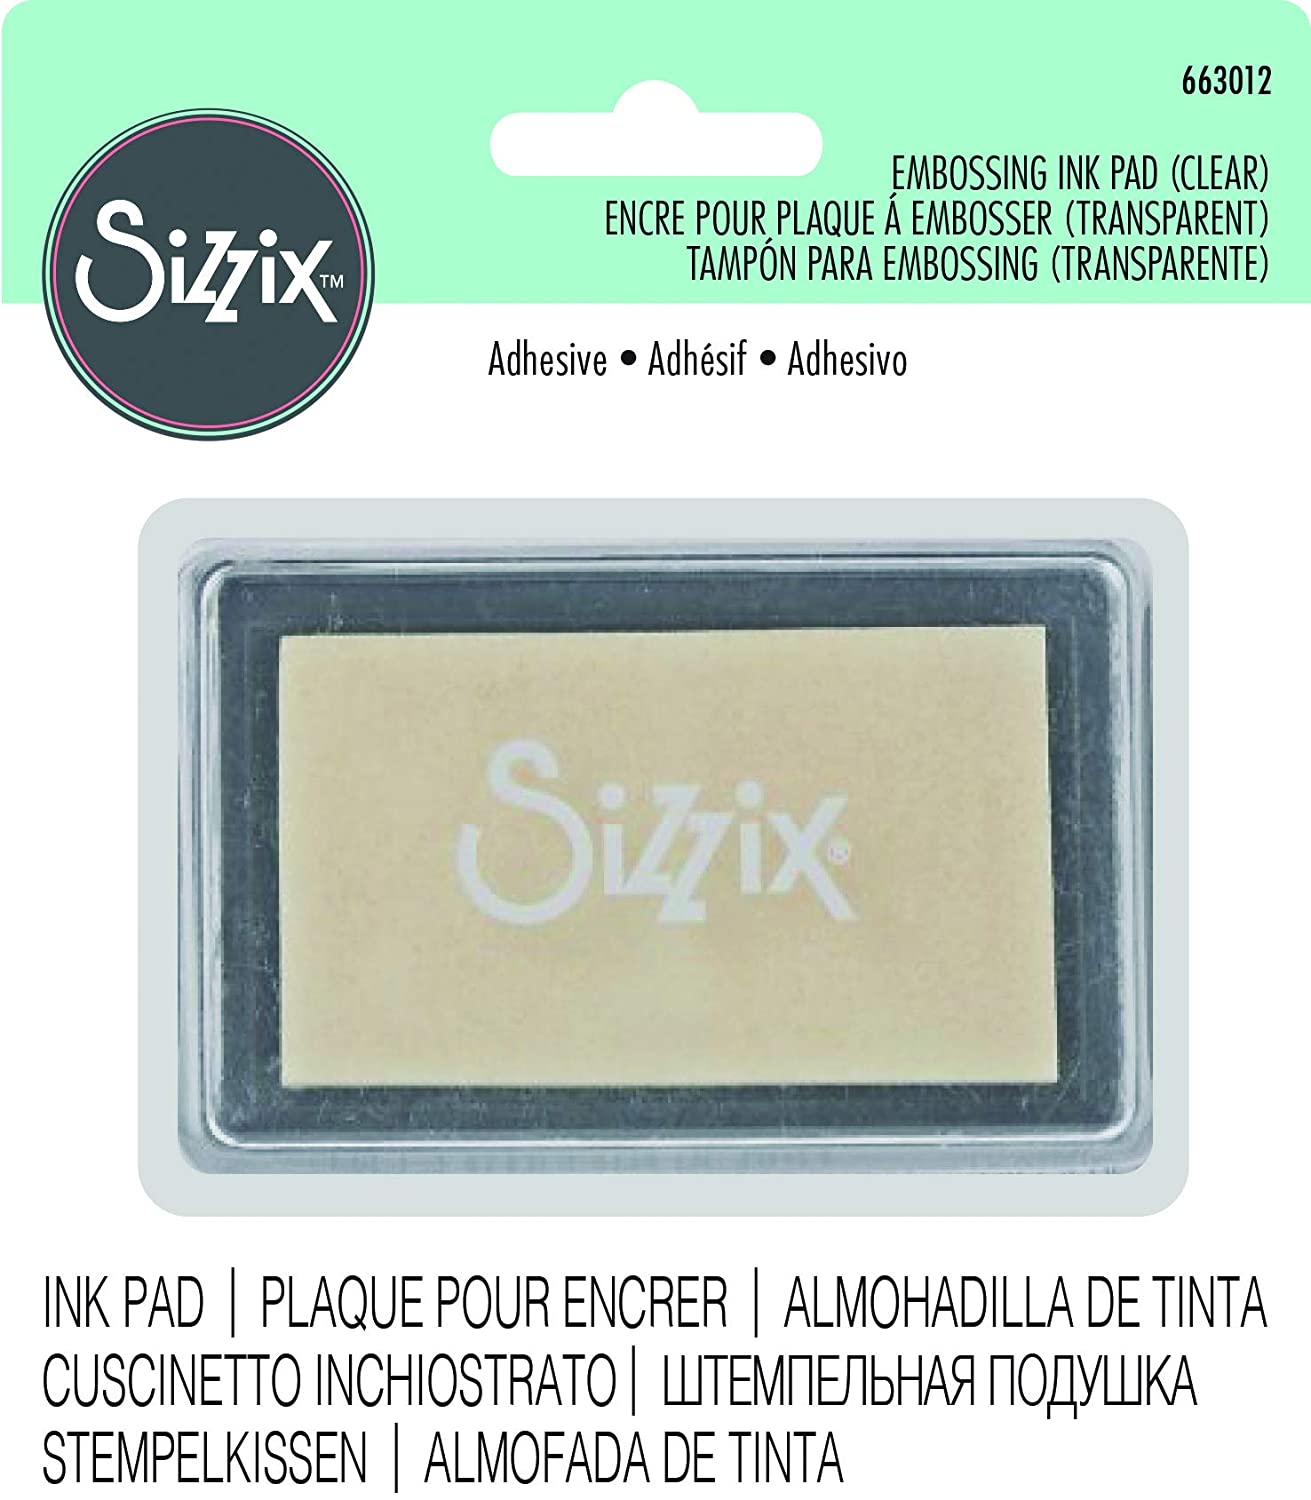 SIZZIX 663012  Embossing Ink Pad , Transparente, Tamanho único, 16 x 14 x 3 cm